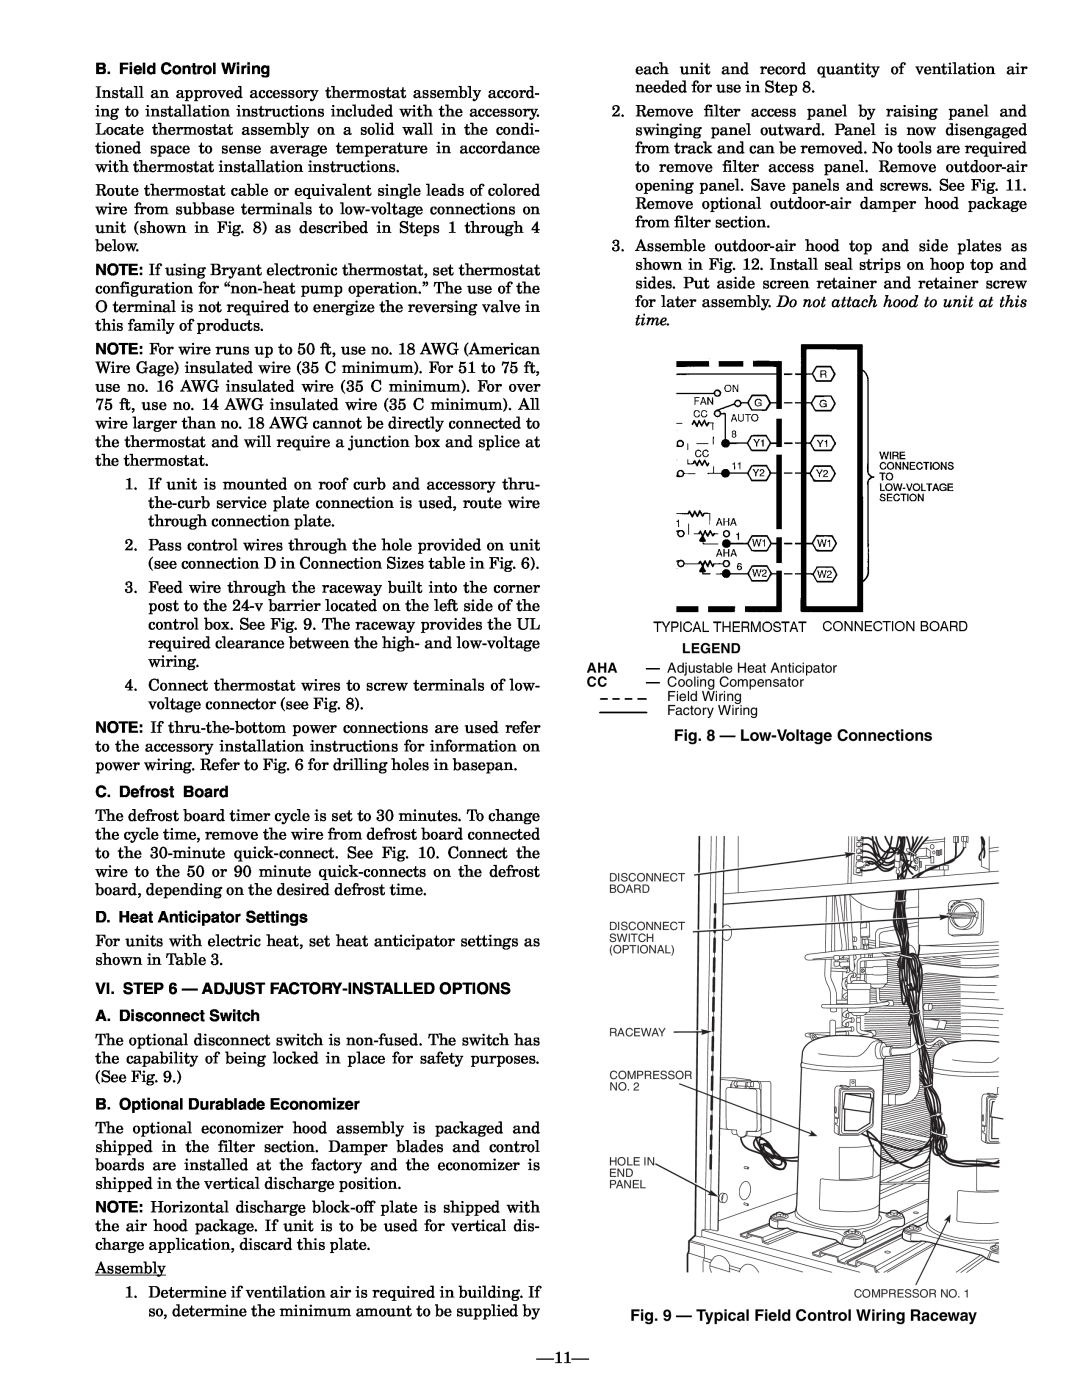 Bryant 548D B. Field Control Wiring, C. Defrost Board, D. Heat Anticipator Settings, Vi. - Adjust Factory-Installedoptions 